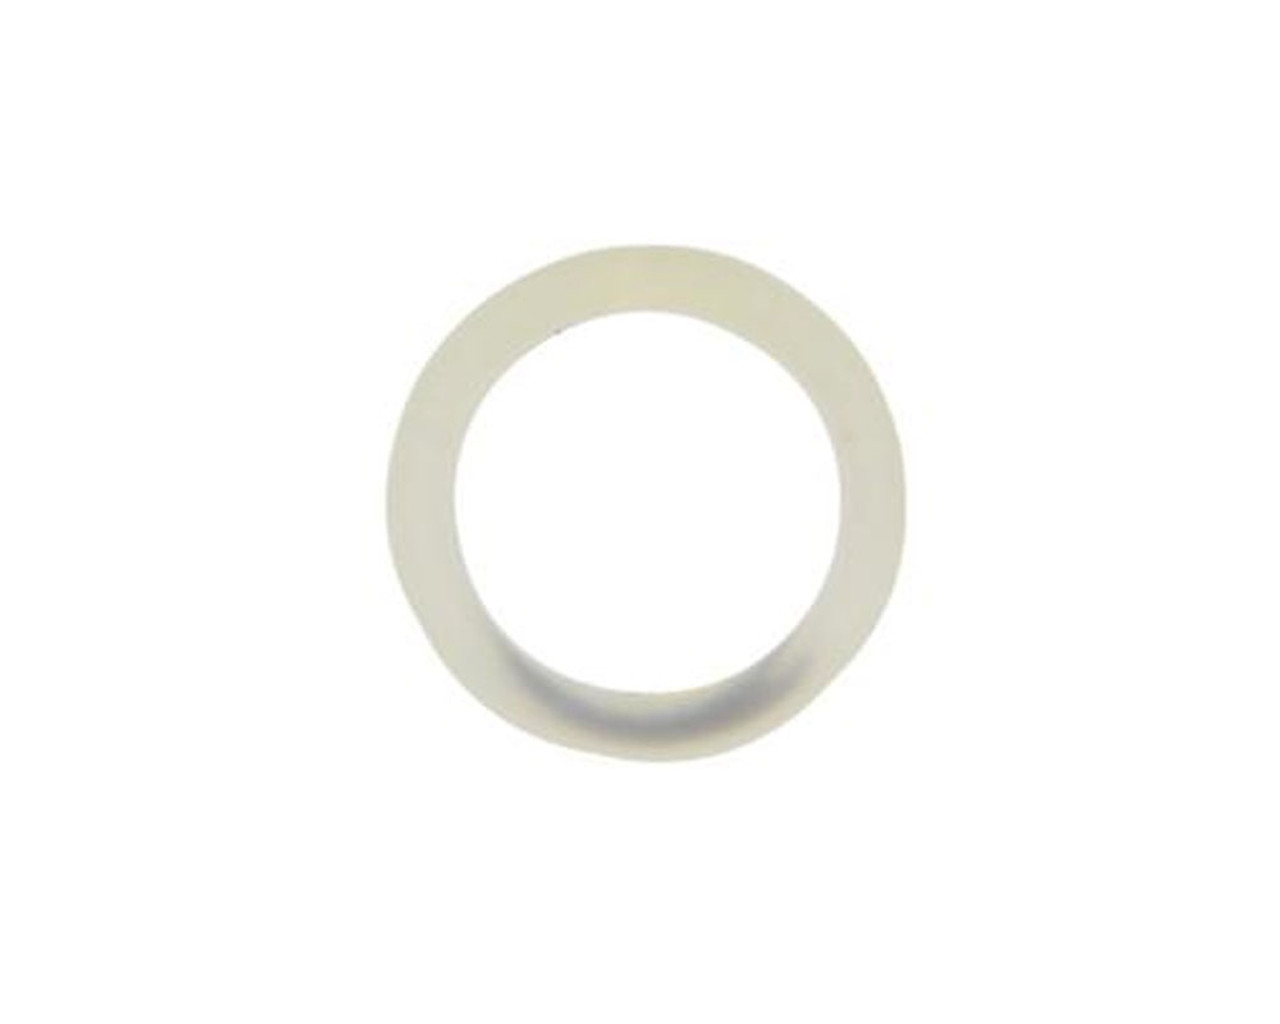 OR CS= 2 mm Oring ID x CS PU90 ShA O Ring Seals/ Urethane Polyurethane (PU)  O-Rings - AliExpress